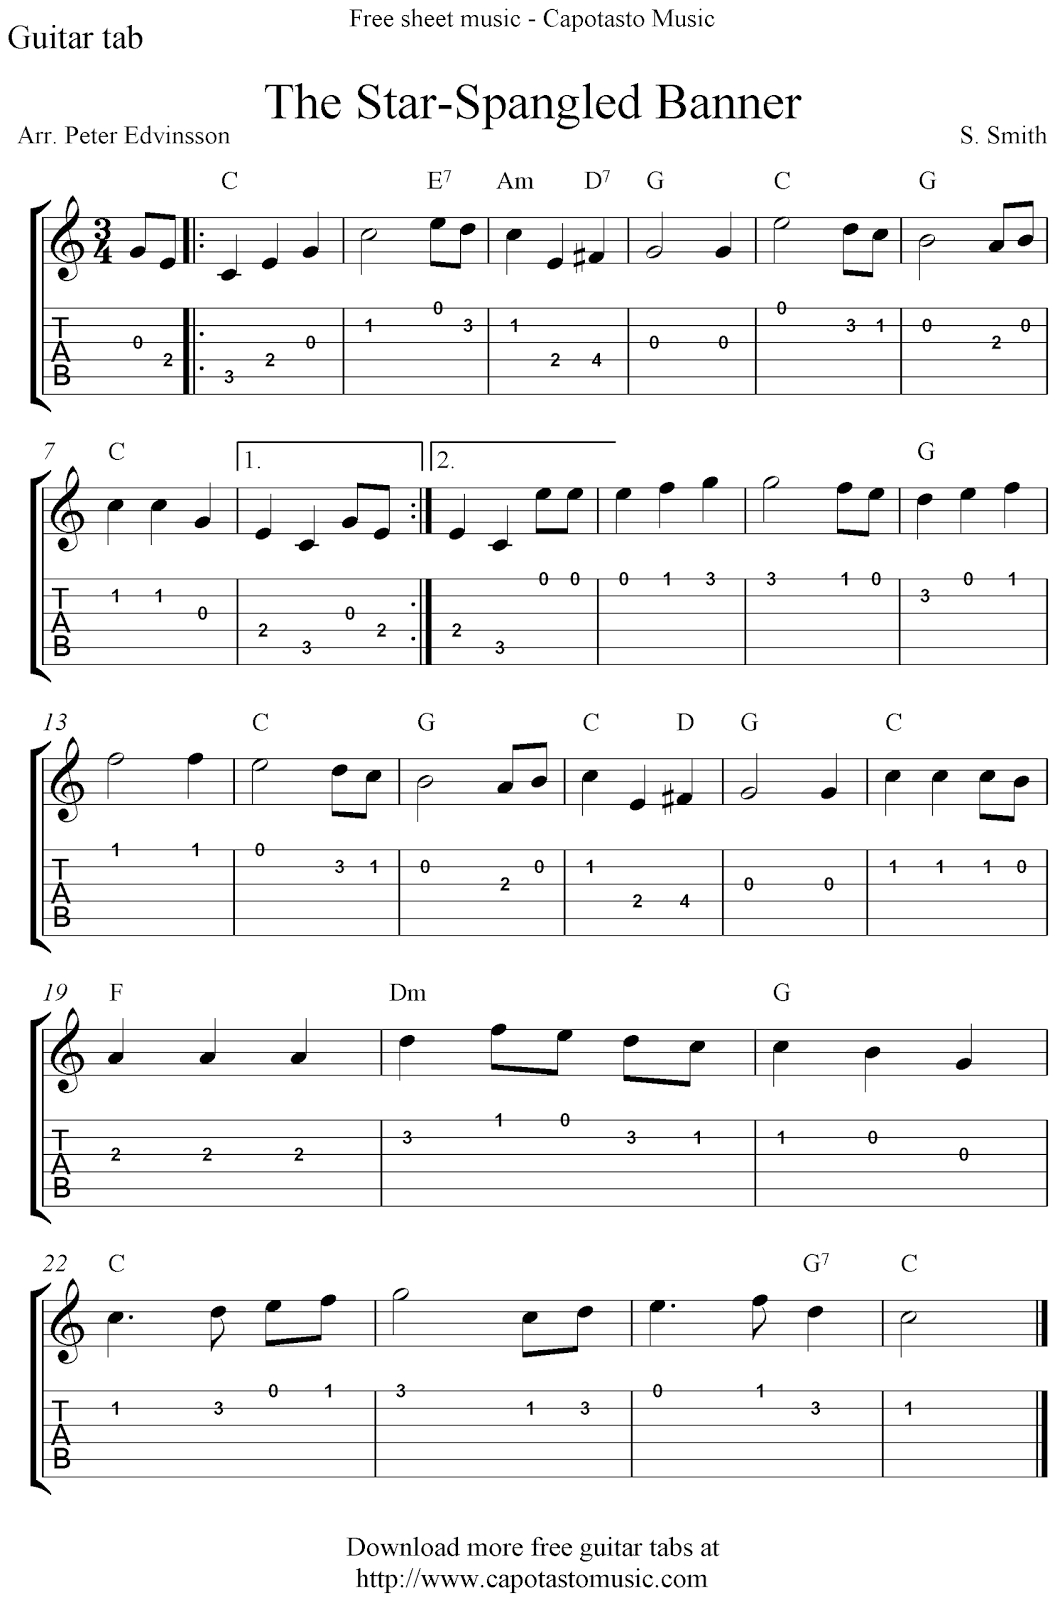 The Star-Spangled Banner, Free Guitar Tablature Sheet Music Notes - Free Printable Guitar Music